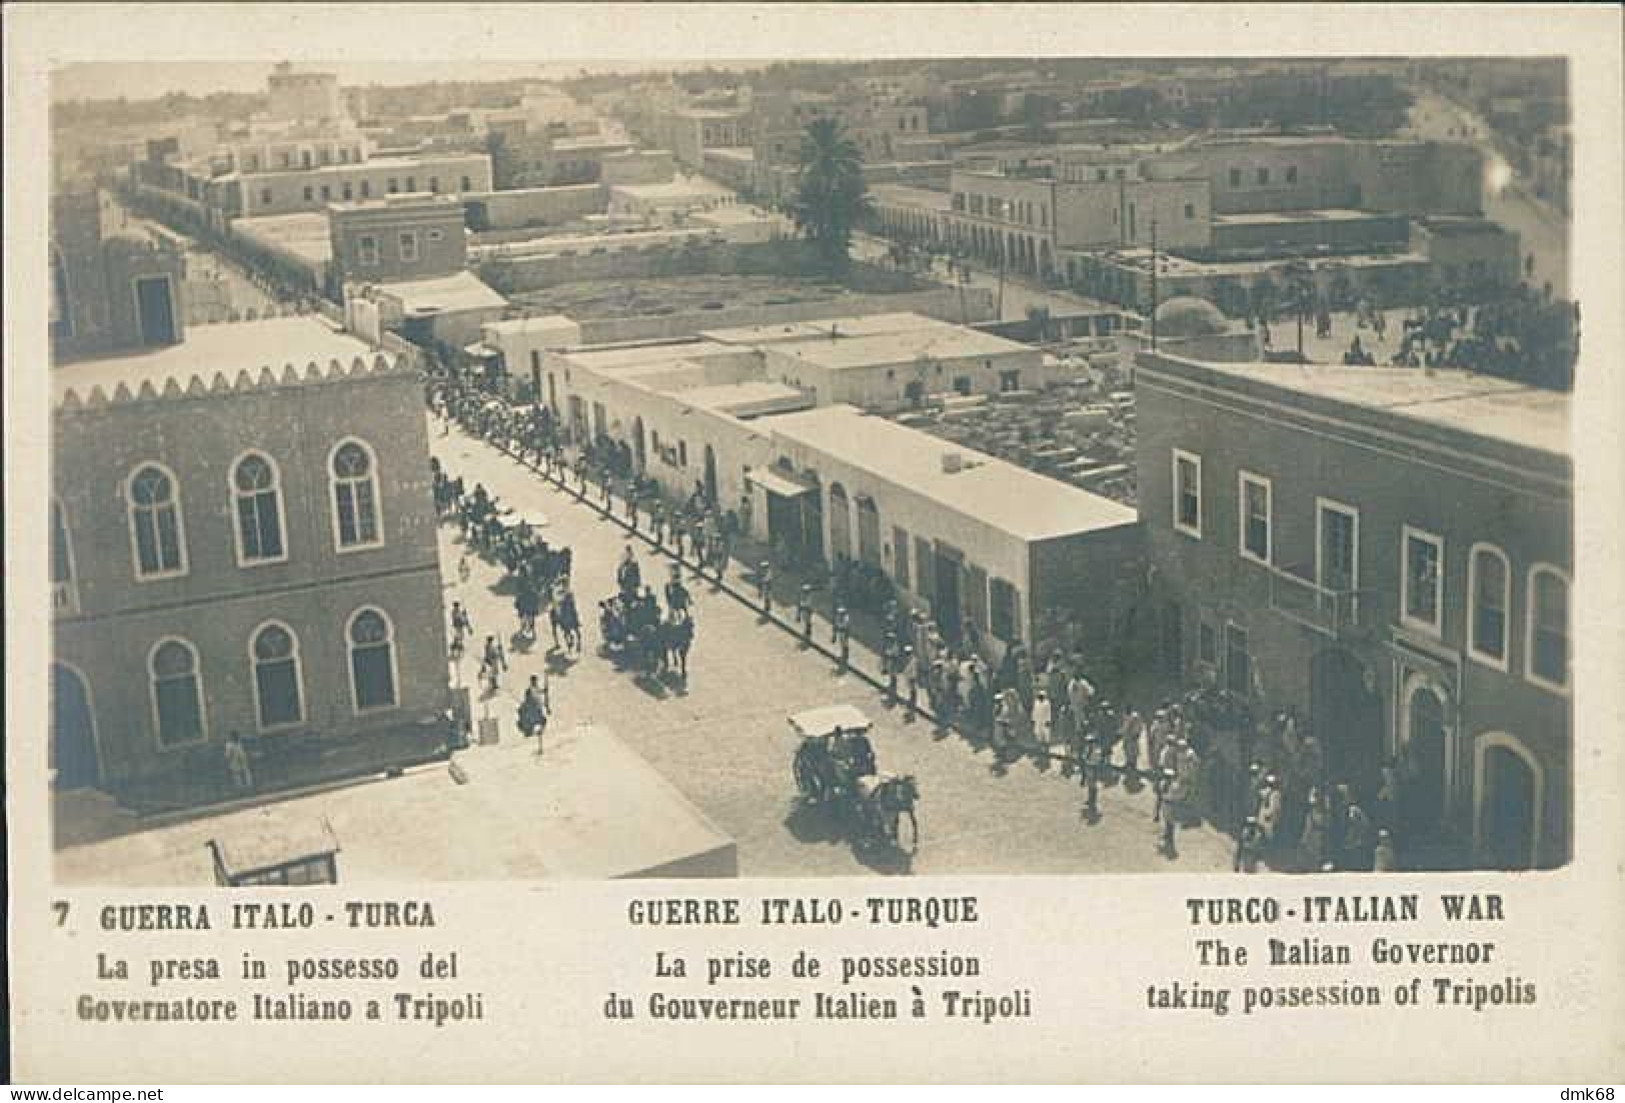 LIBYA / LIBIA - TURKEY / ITALY WAR - ITALIAN GOVERNOR TAKING POSSESSION OF TRIPOLI - RPPC POSTCARD 1910s (12595) - Libye